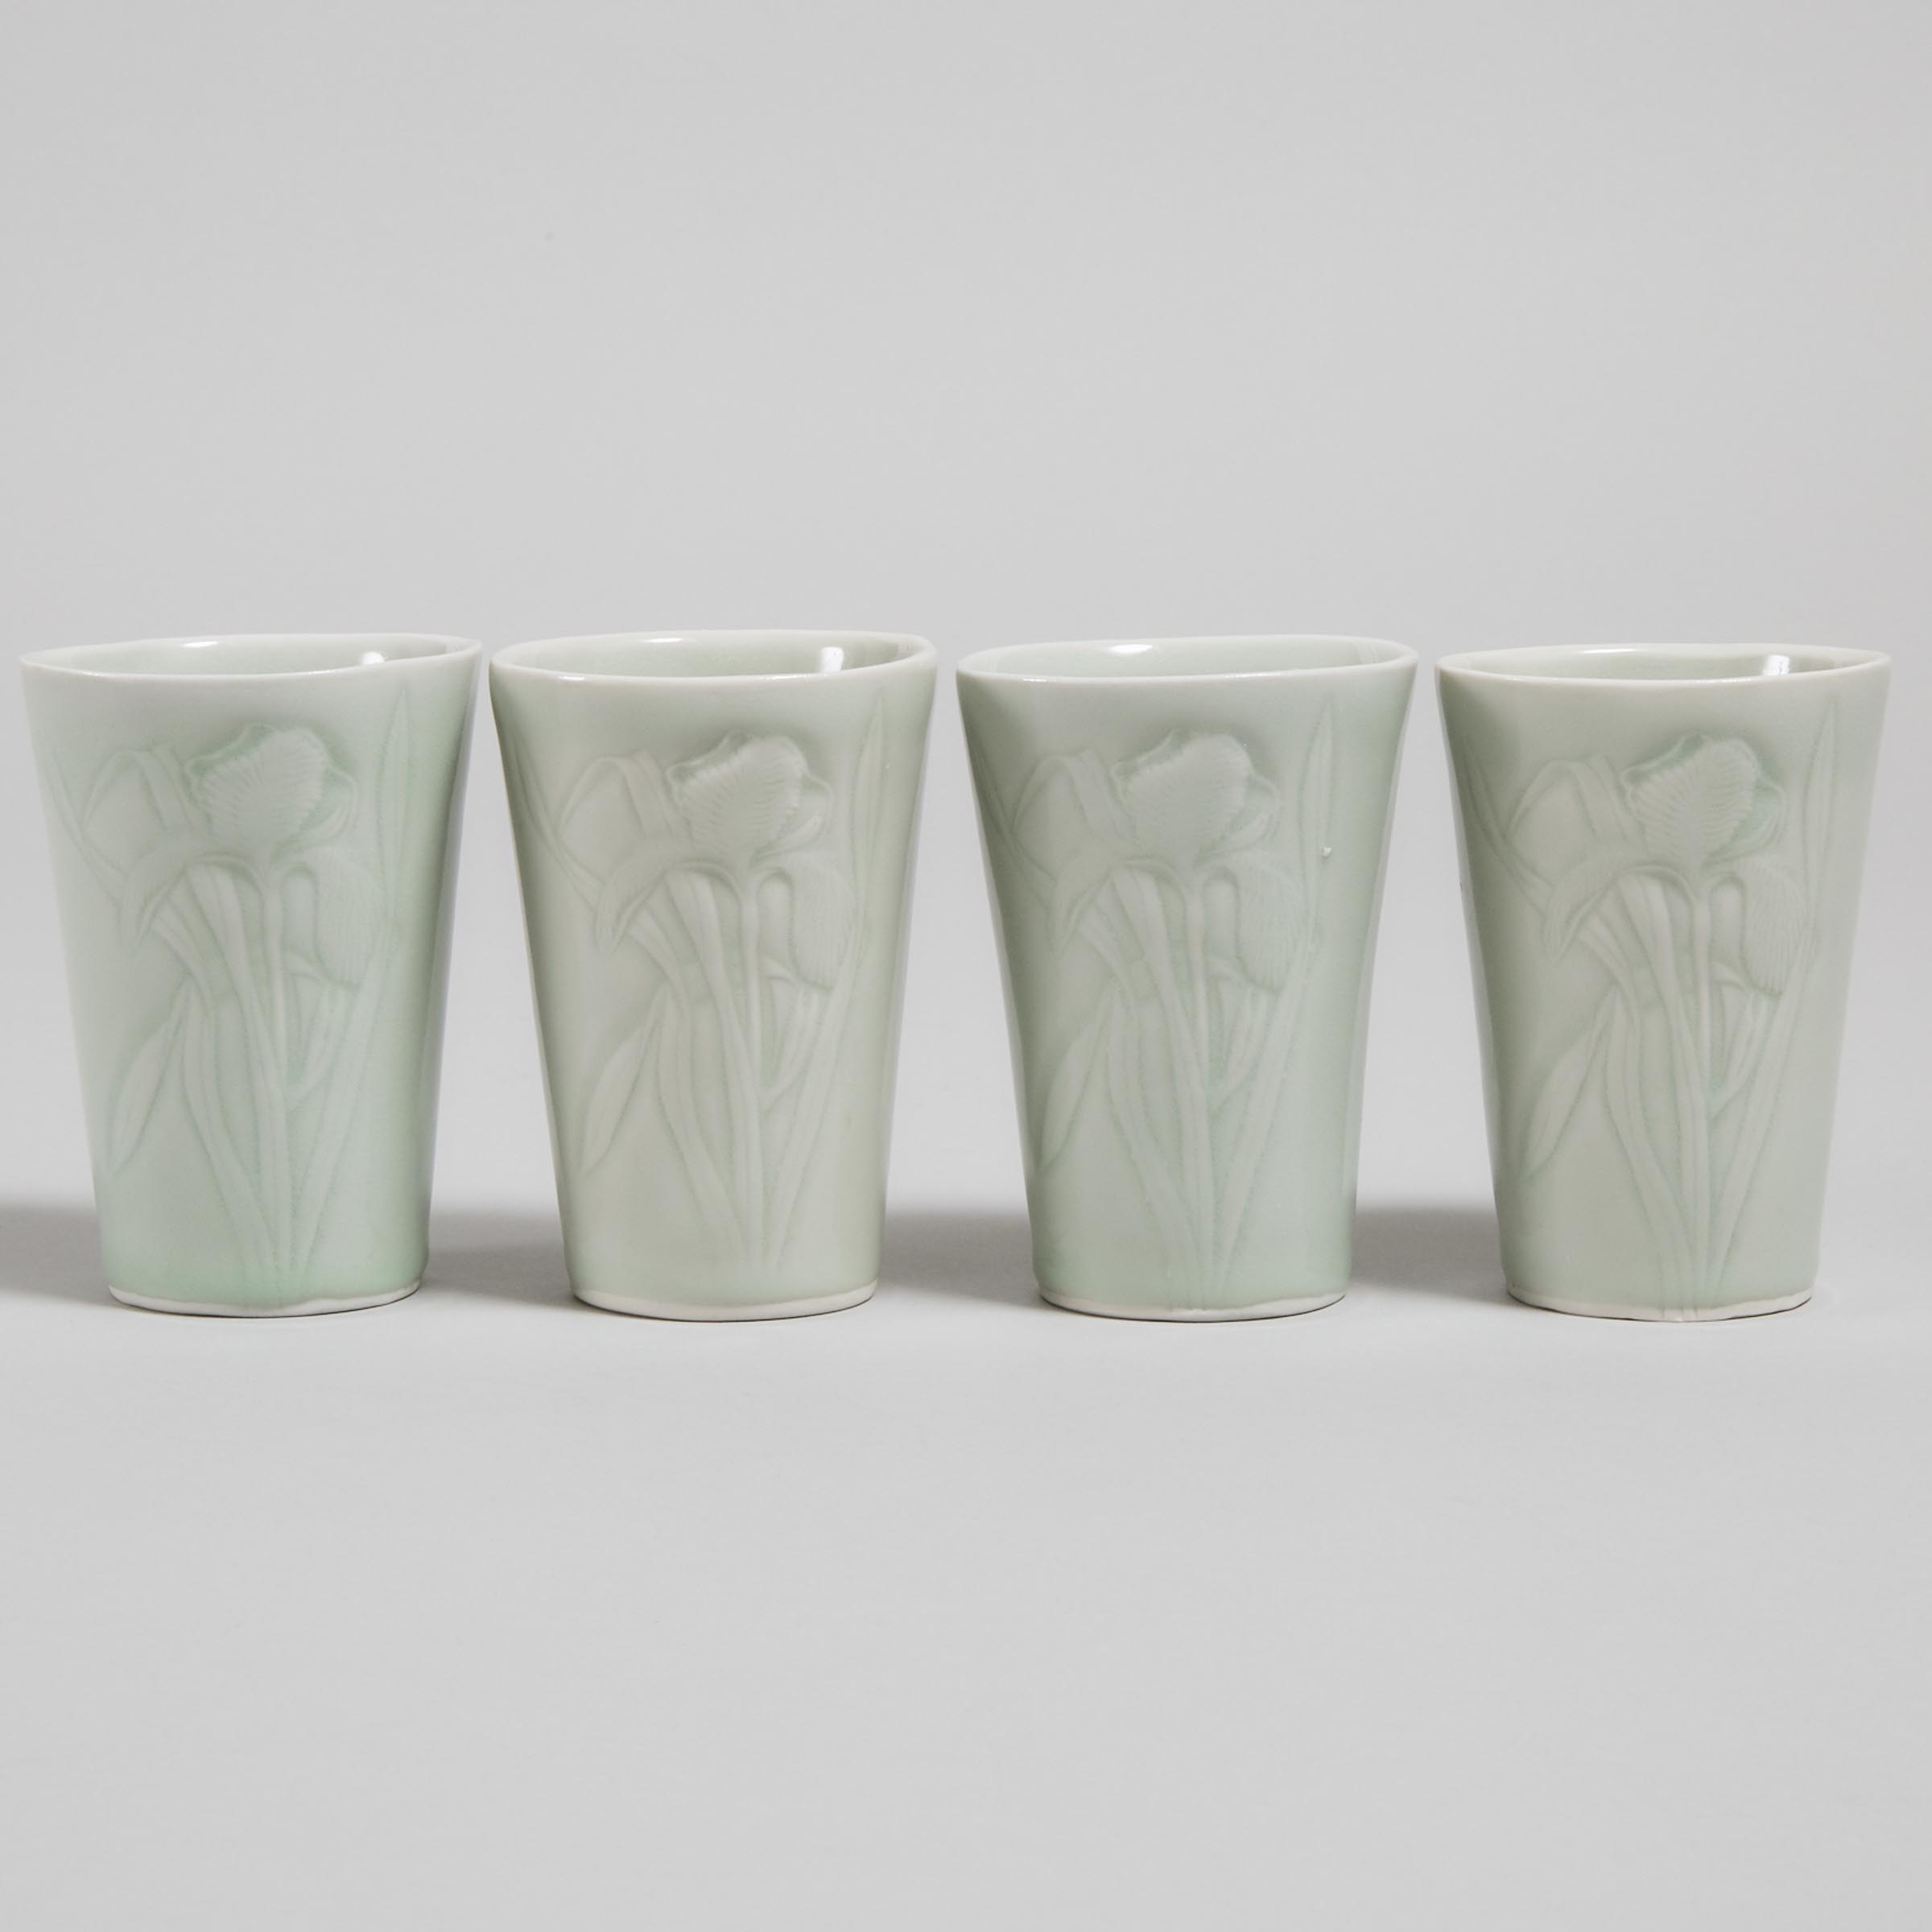 Harlan House (Canadian, b.1943), Four Iris Celadon Glazed Cups, c.1980